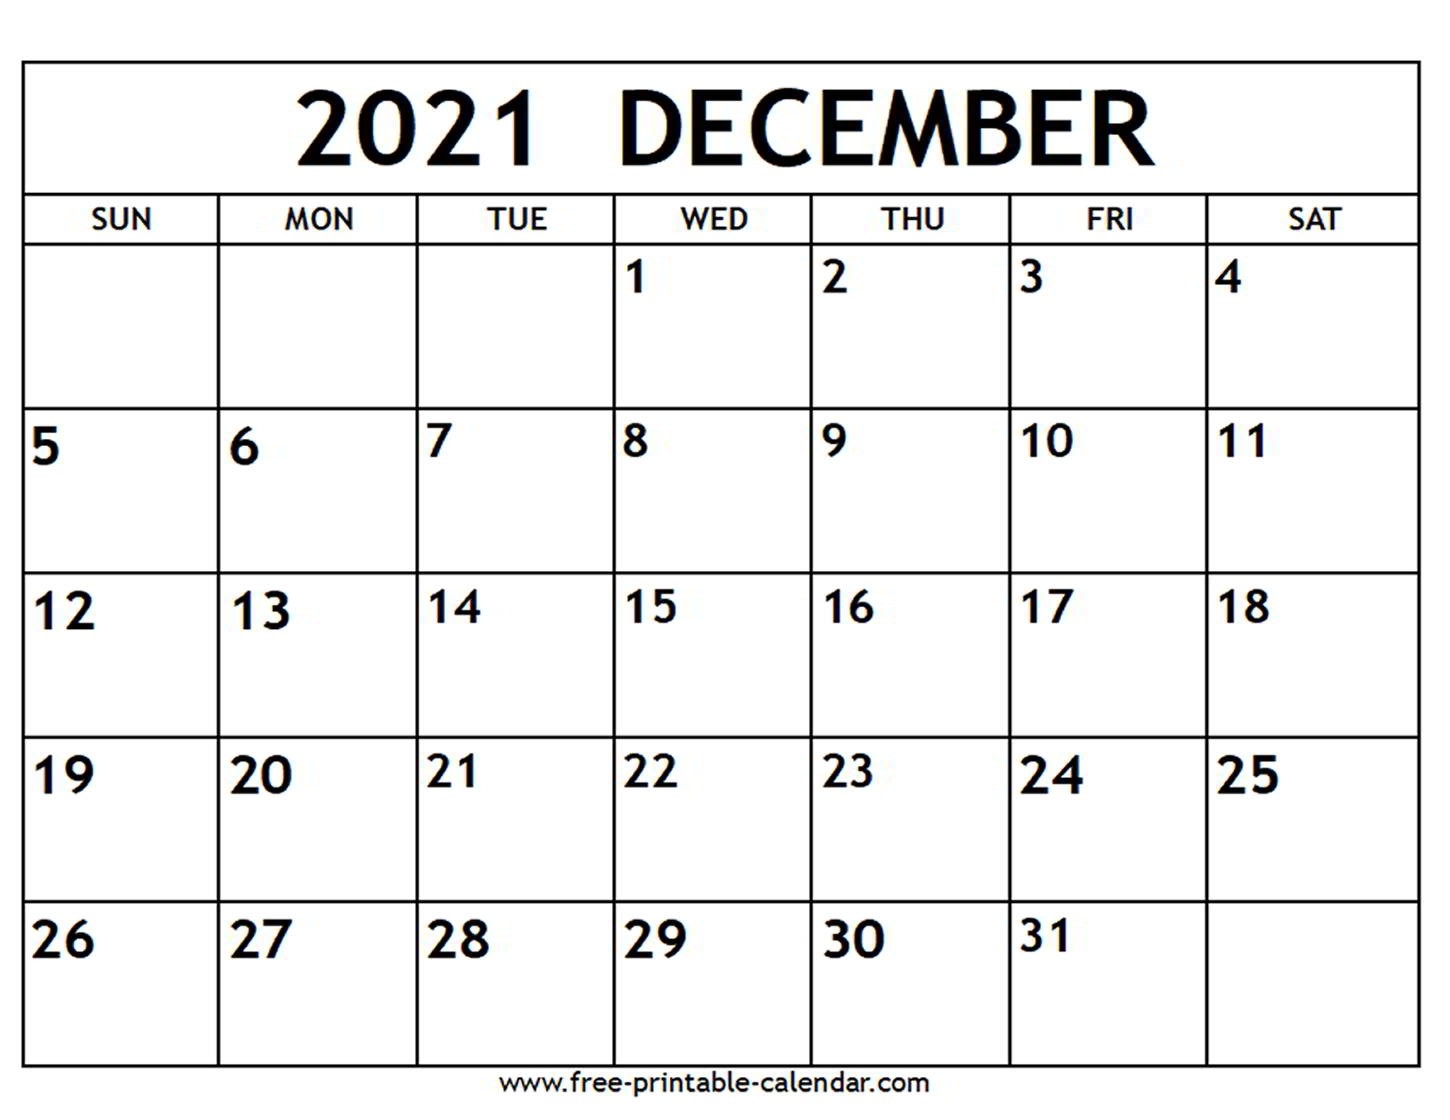 December 2021 Calendar - Free-Printable-Calendar-December 2021 Monthly Calendar Printable Free Word